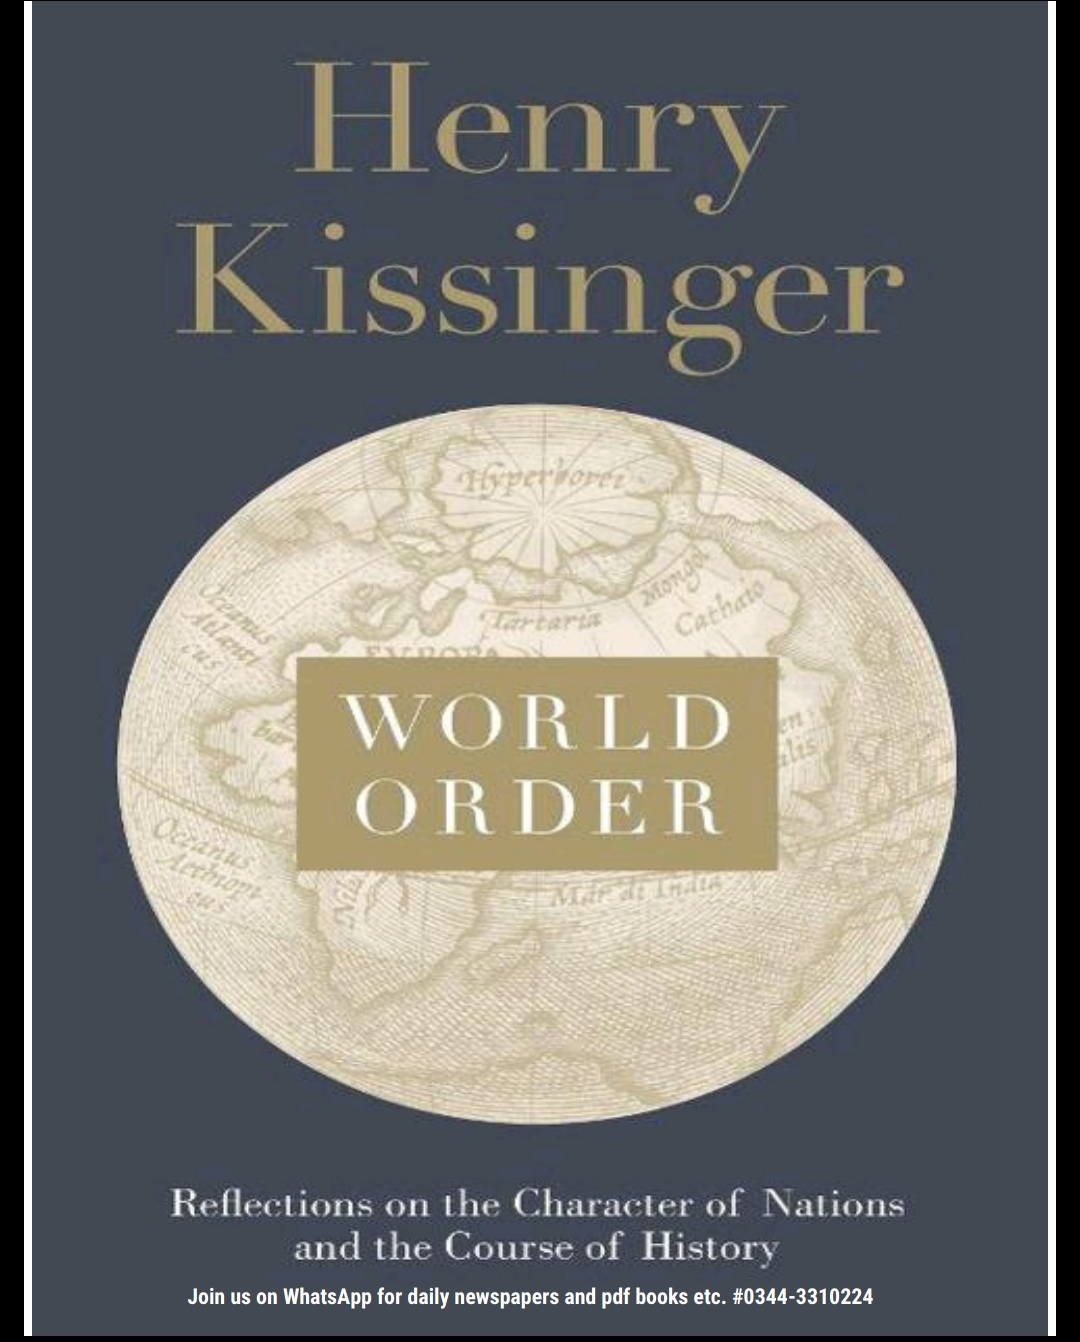 henry kissinger on china pdf download